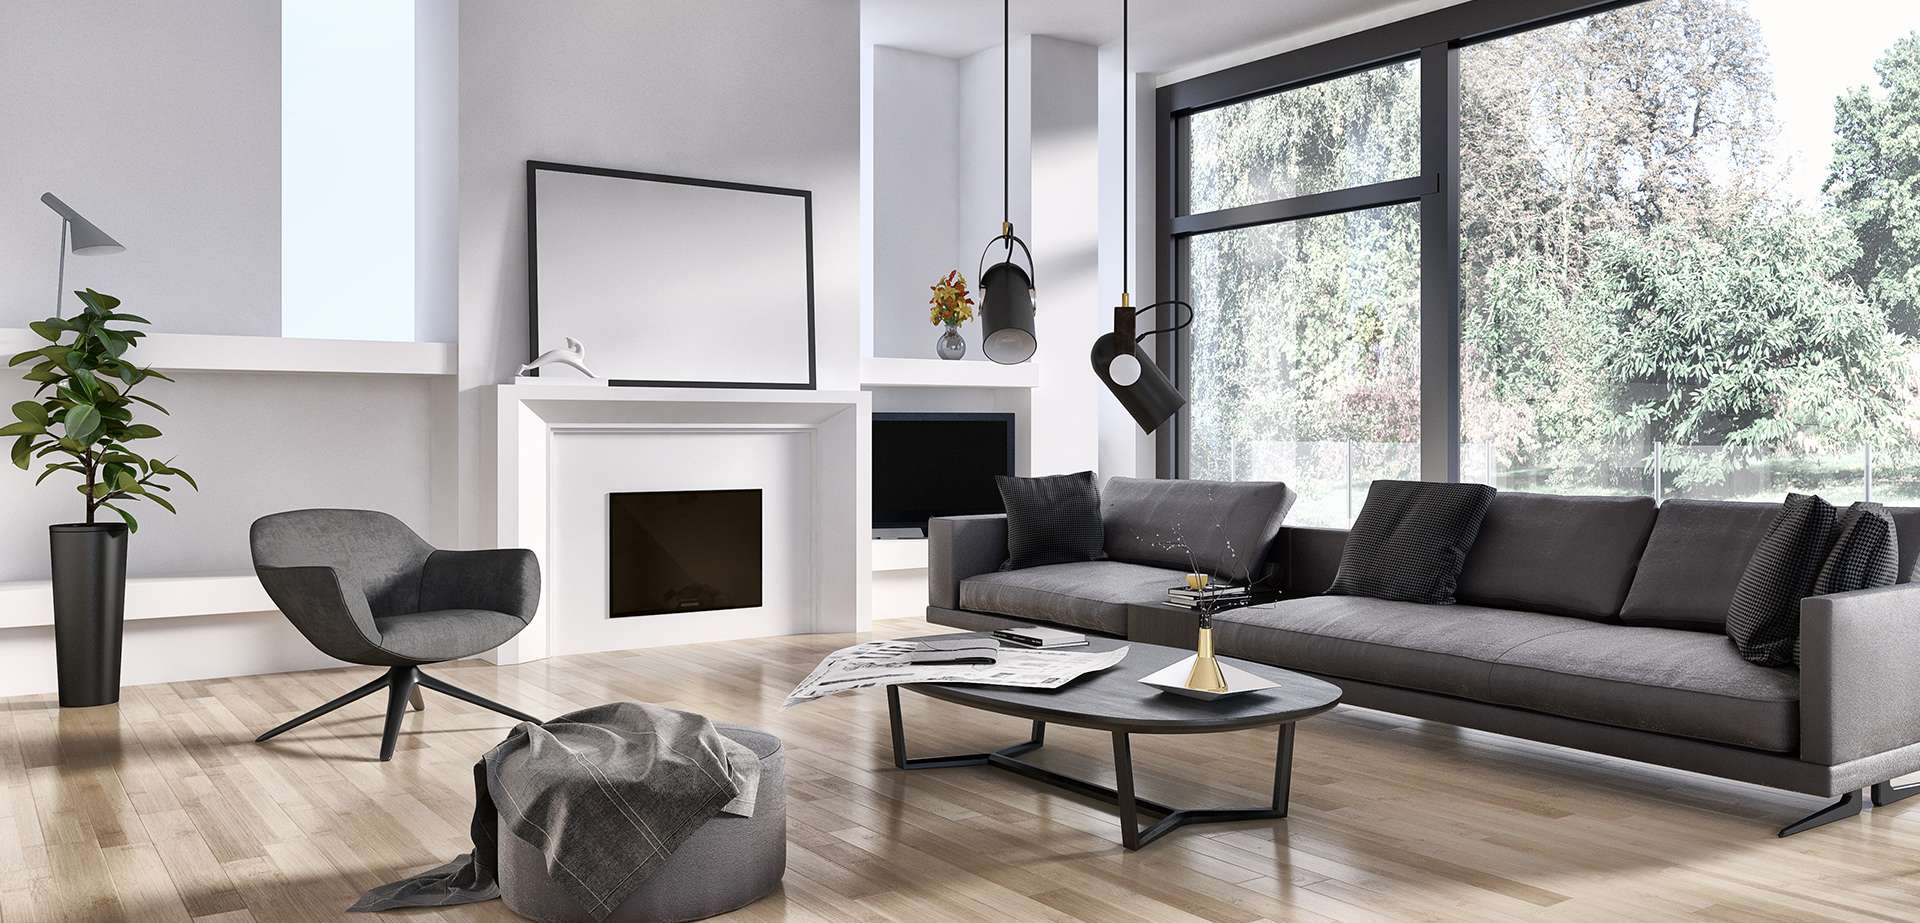 Sala moderna con muebles grises y chimenea